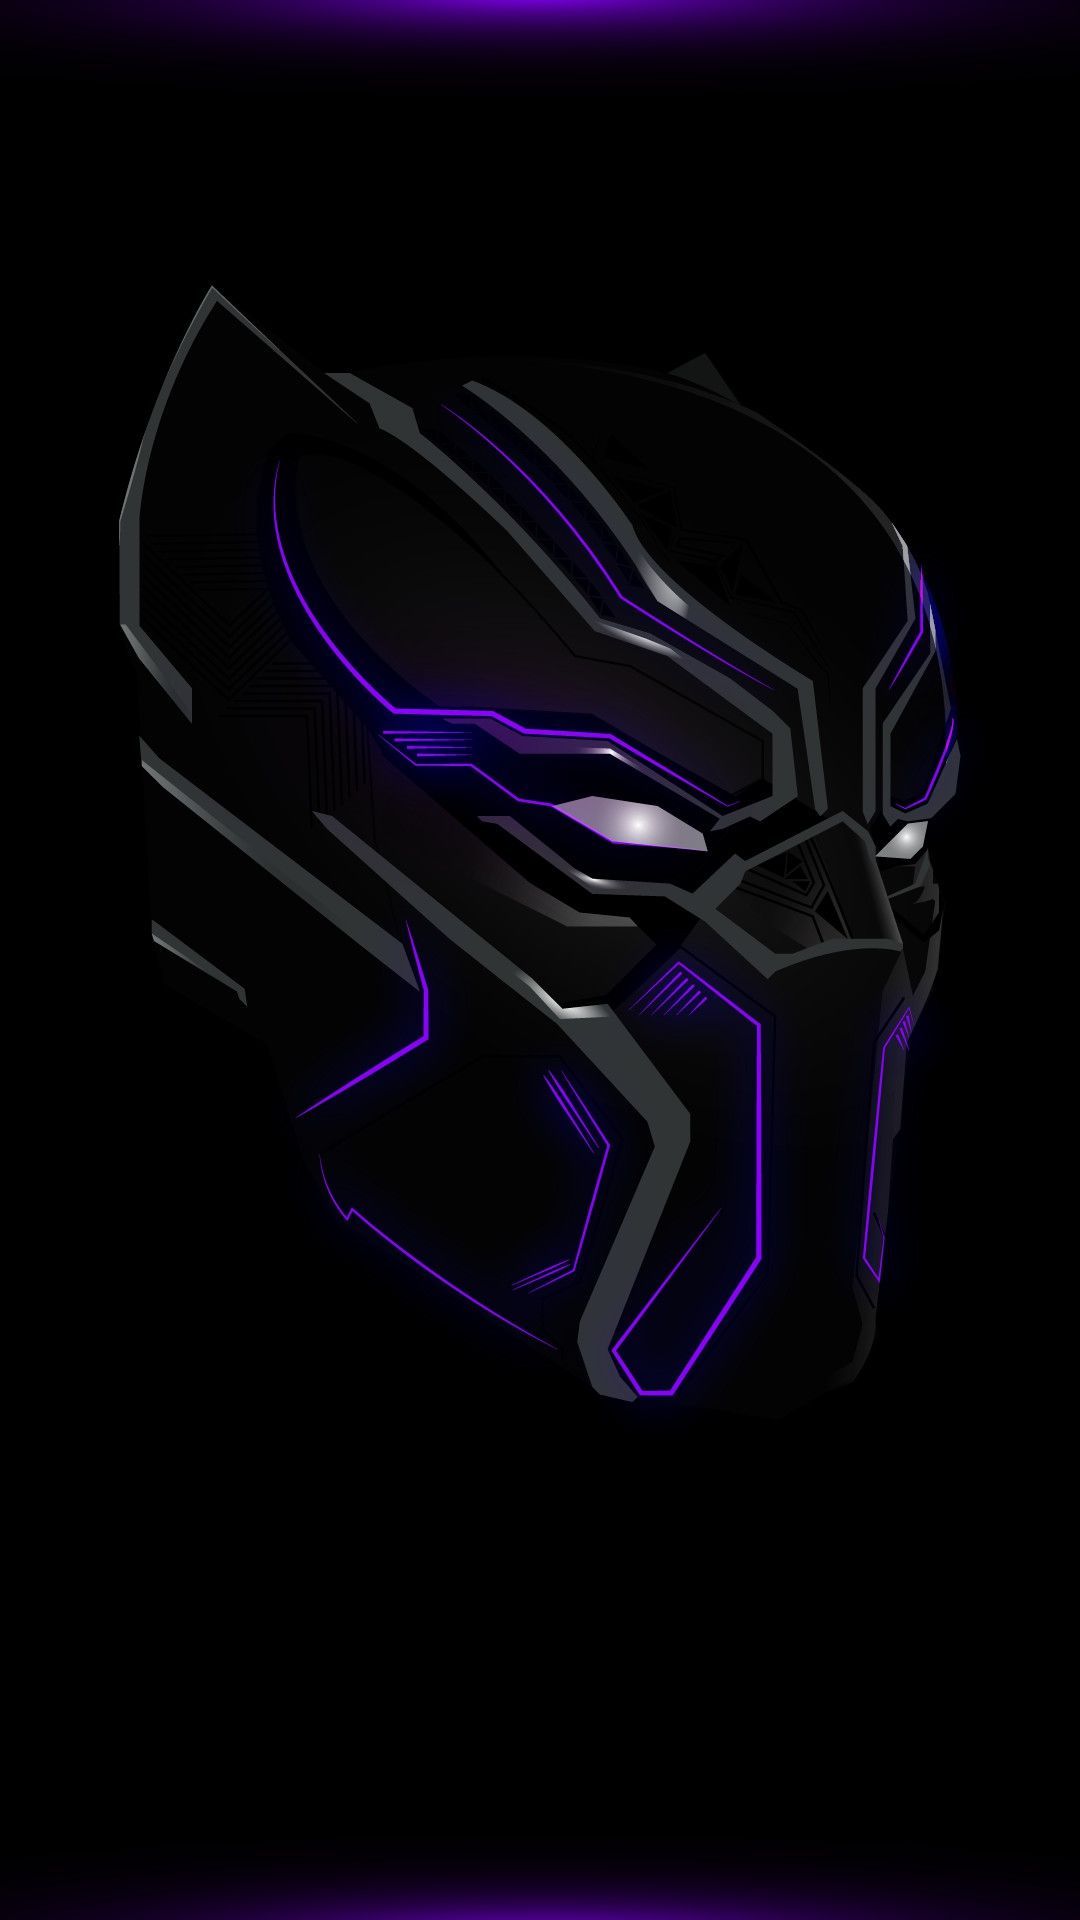 Black Panther 2 Suit iPhone Wallpaper. Black panther marvel